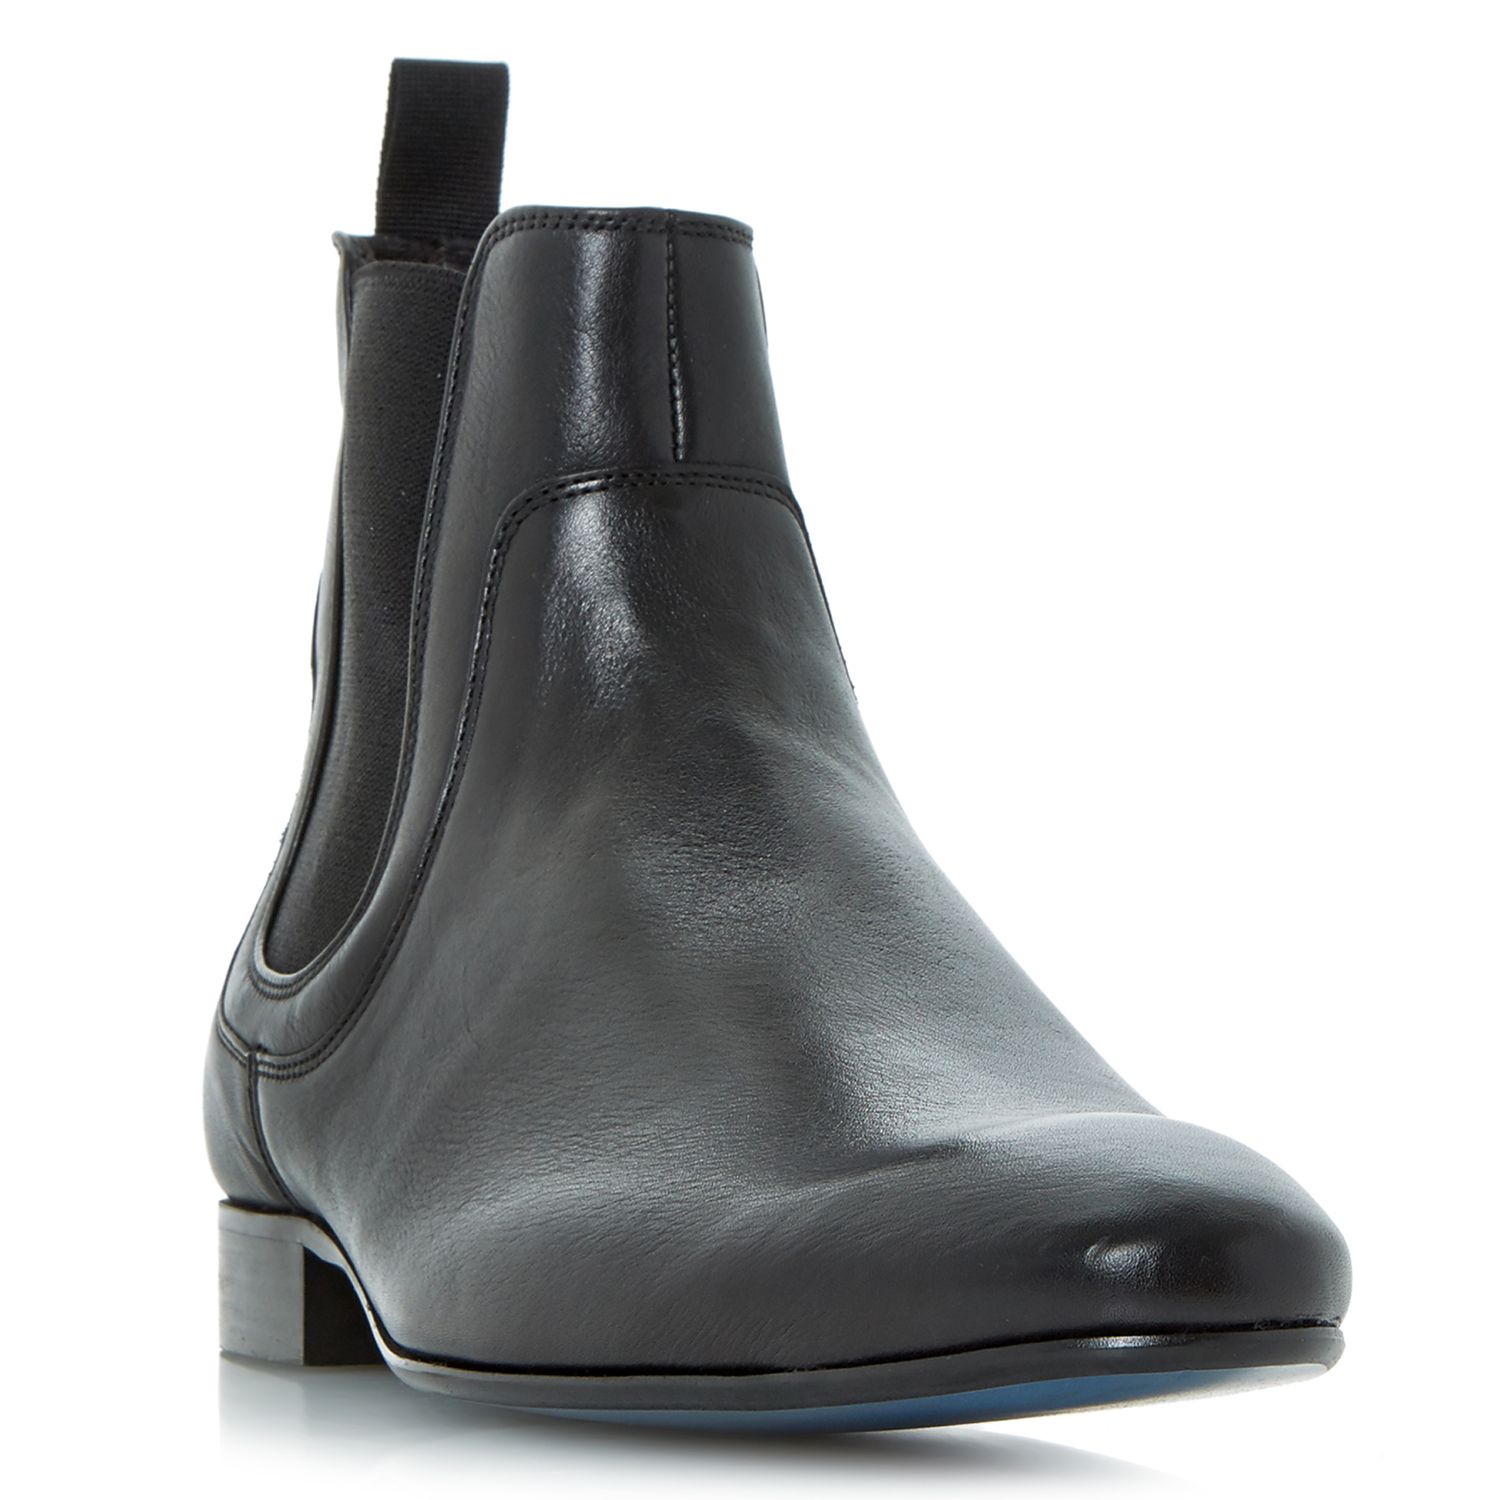 Bertie Maple Leather Chelsea Boots, Black, 9